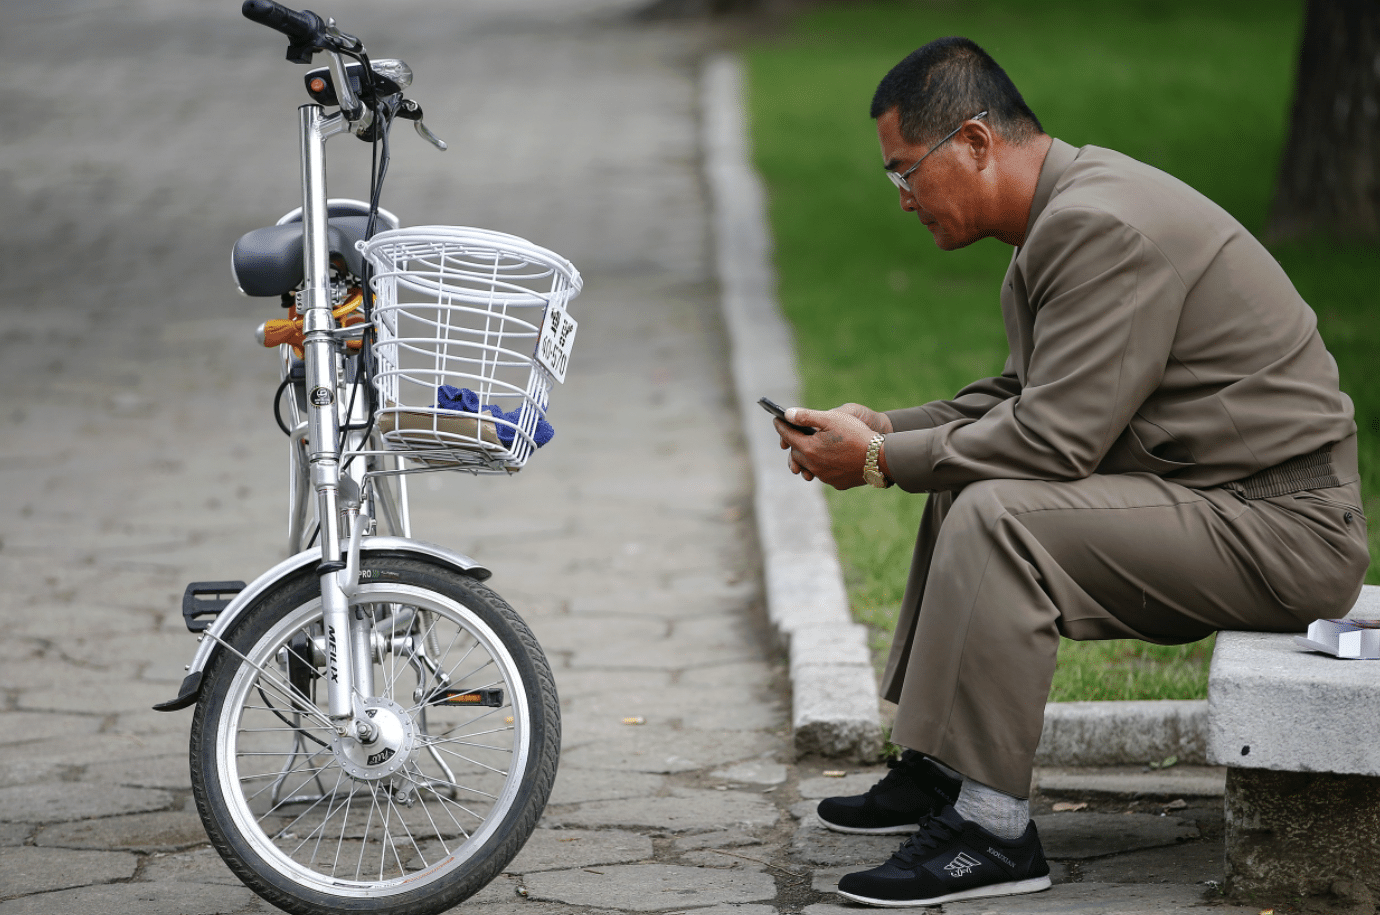 Norcoreanos desbloquean celulares para informarse en medios prohibidos por la dictadura